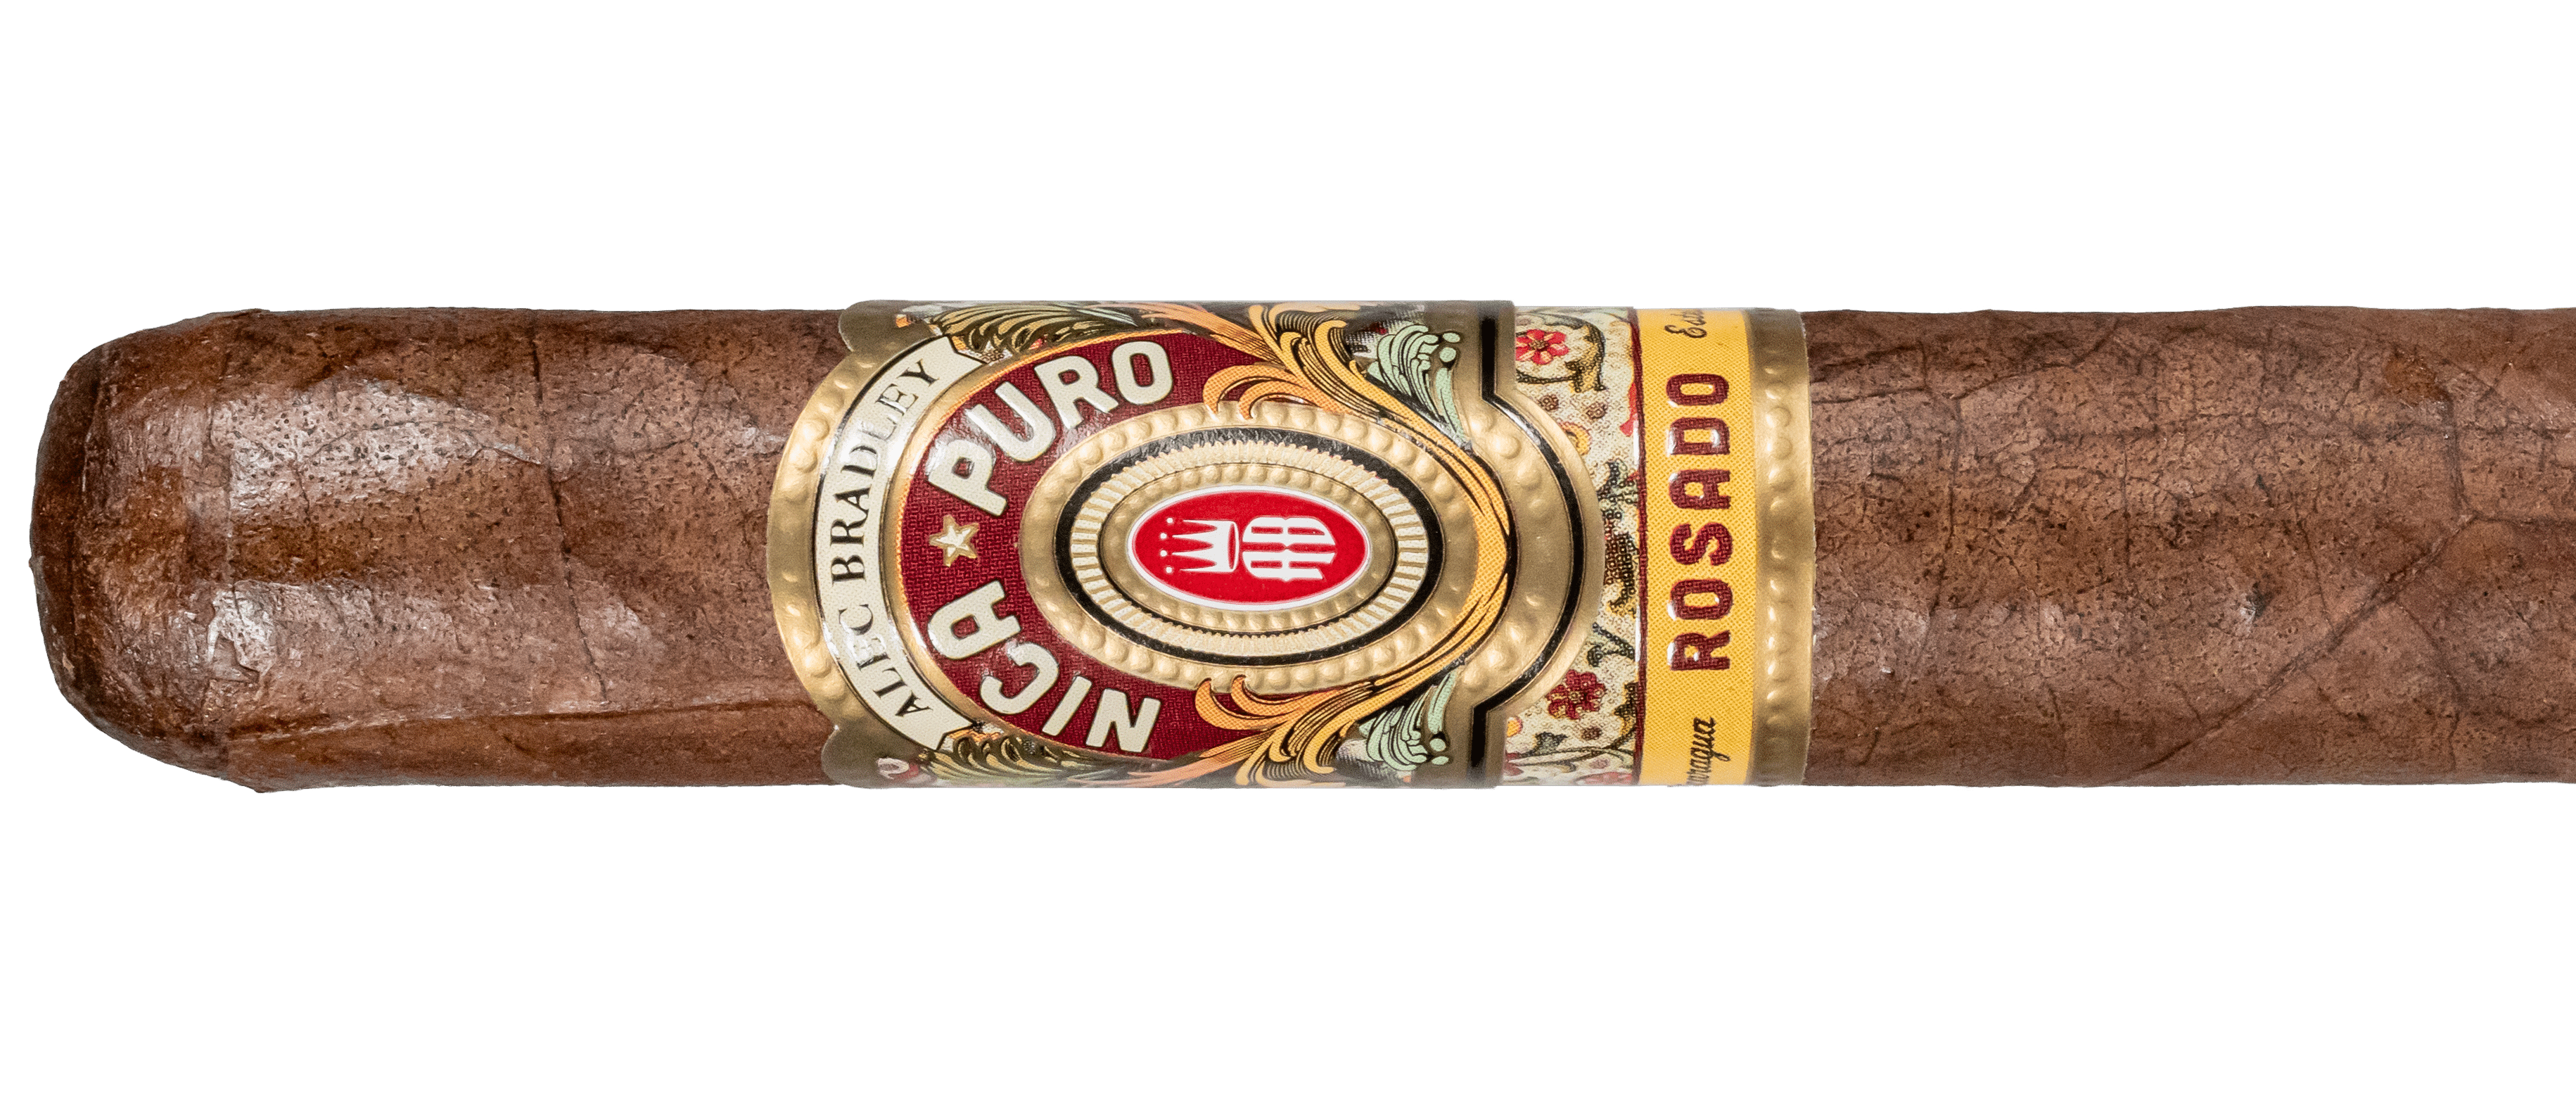 Alec Bradley Nica Puro Rosado Toro - Blind Cigar Review